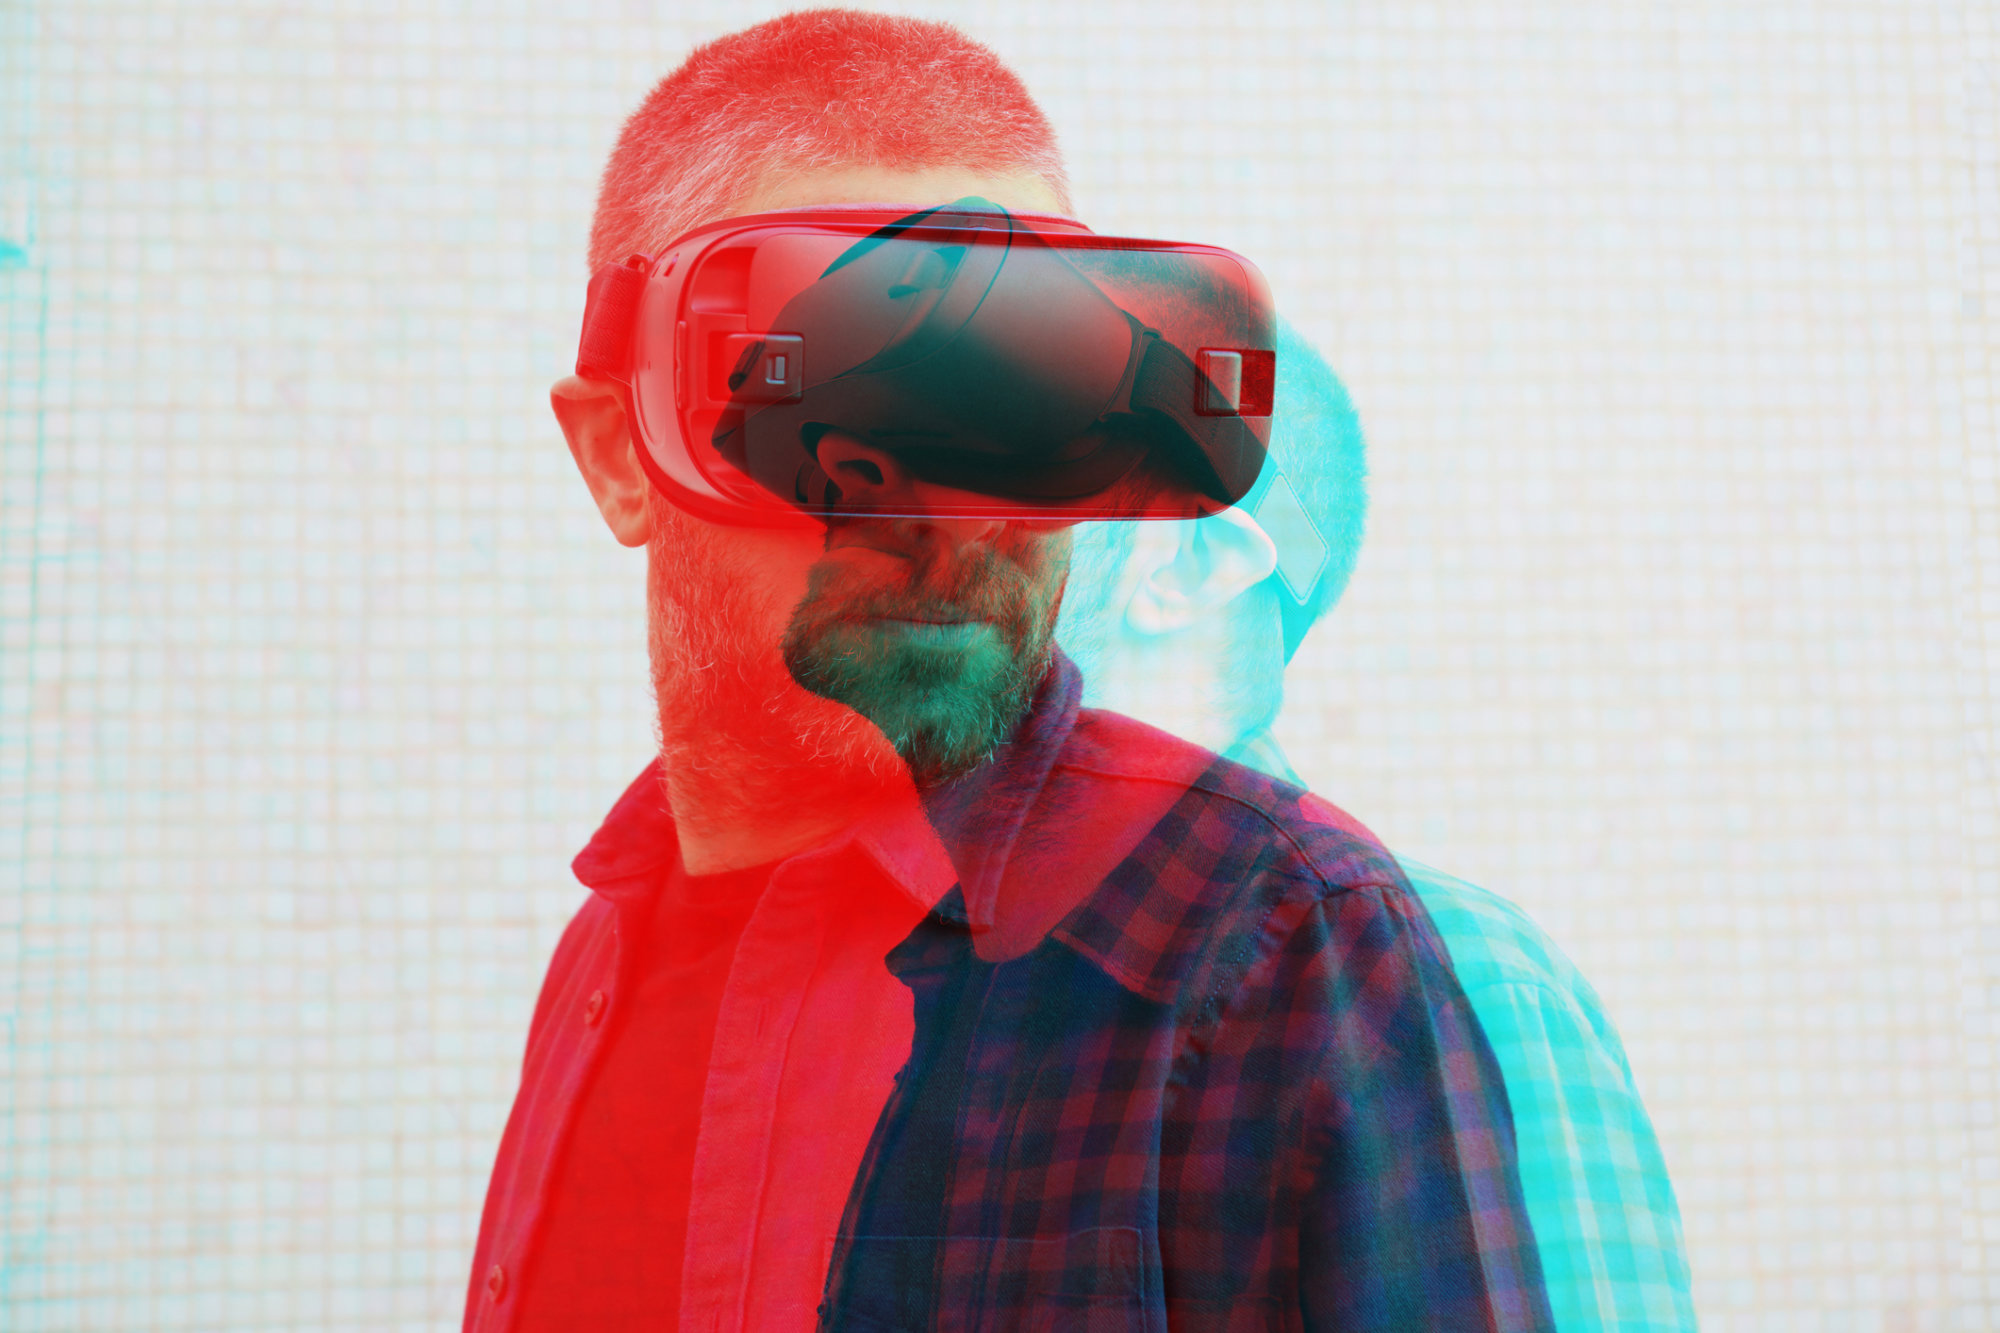 Digital transformation man wearing VR